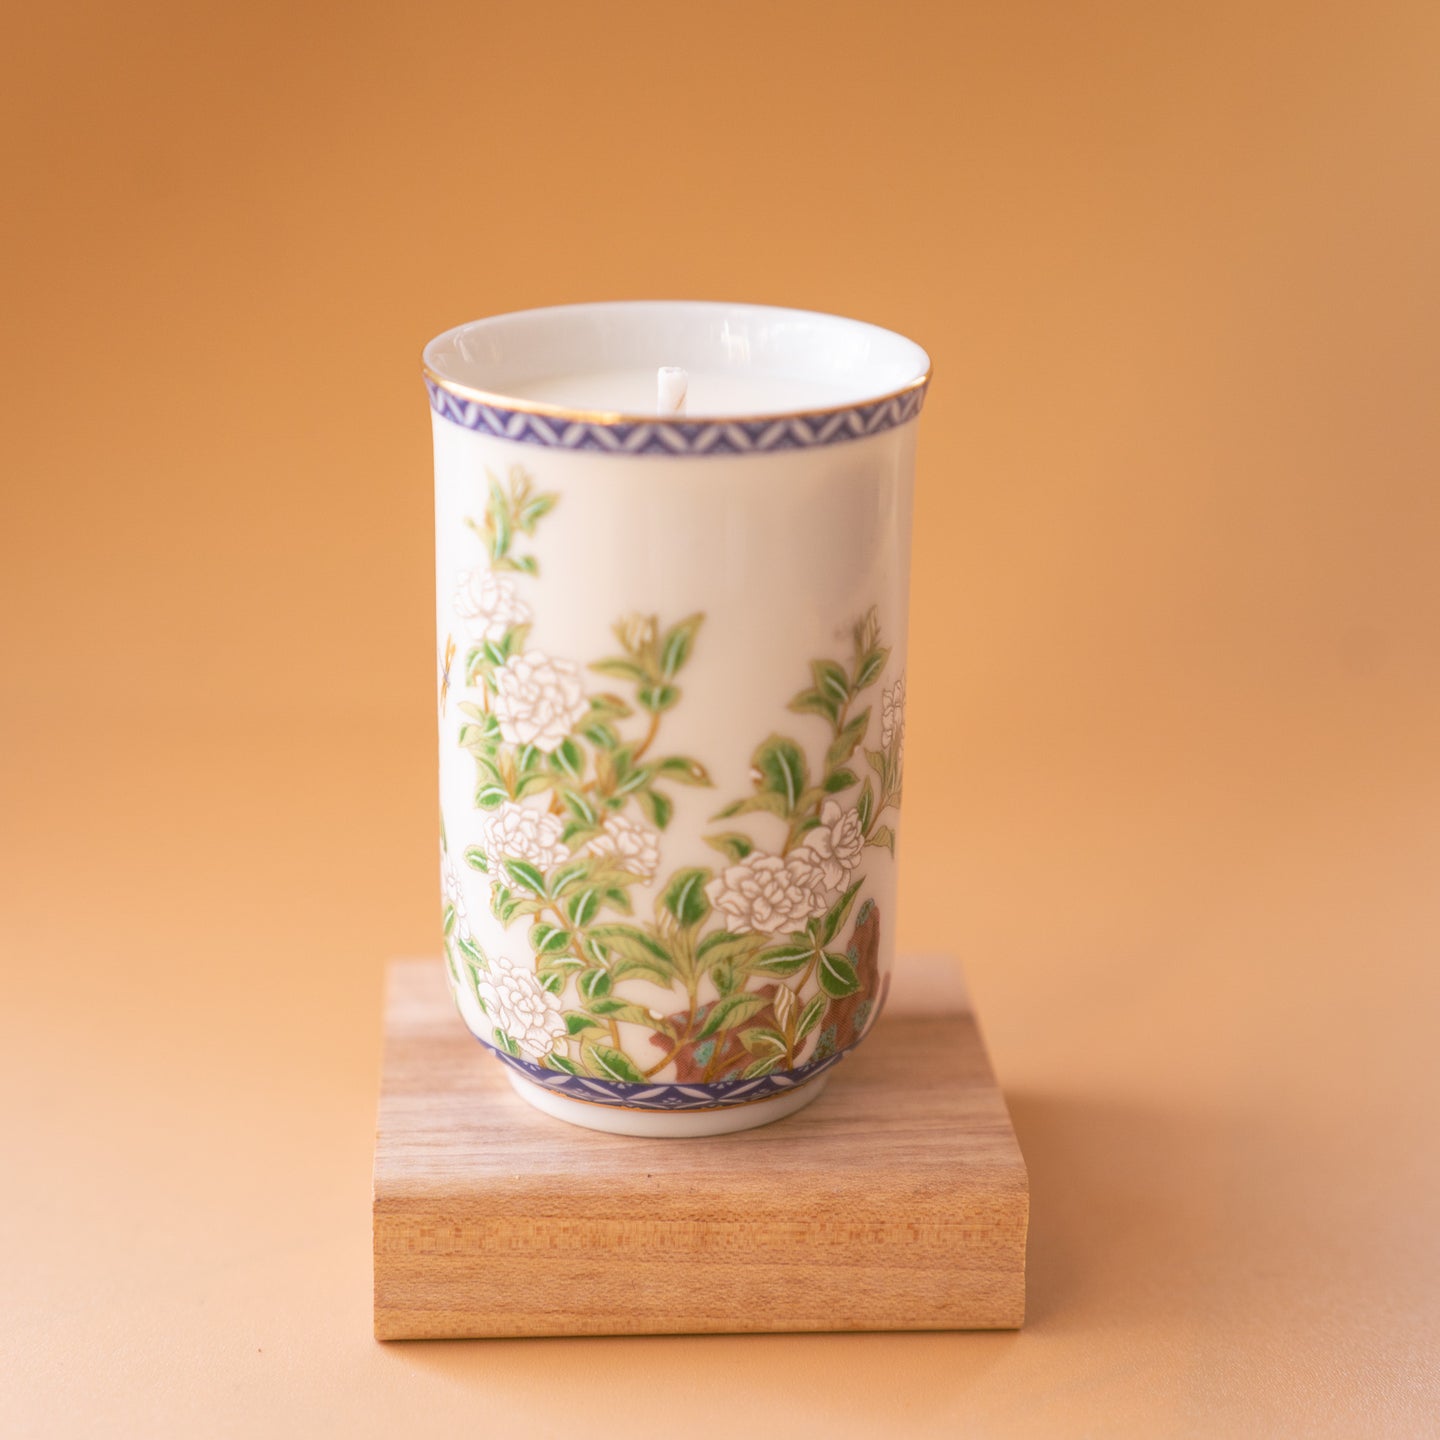 Sairen x Lulumiere Teacup Candle, Mandarin No.4